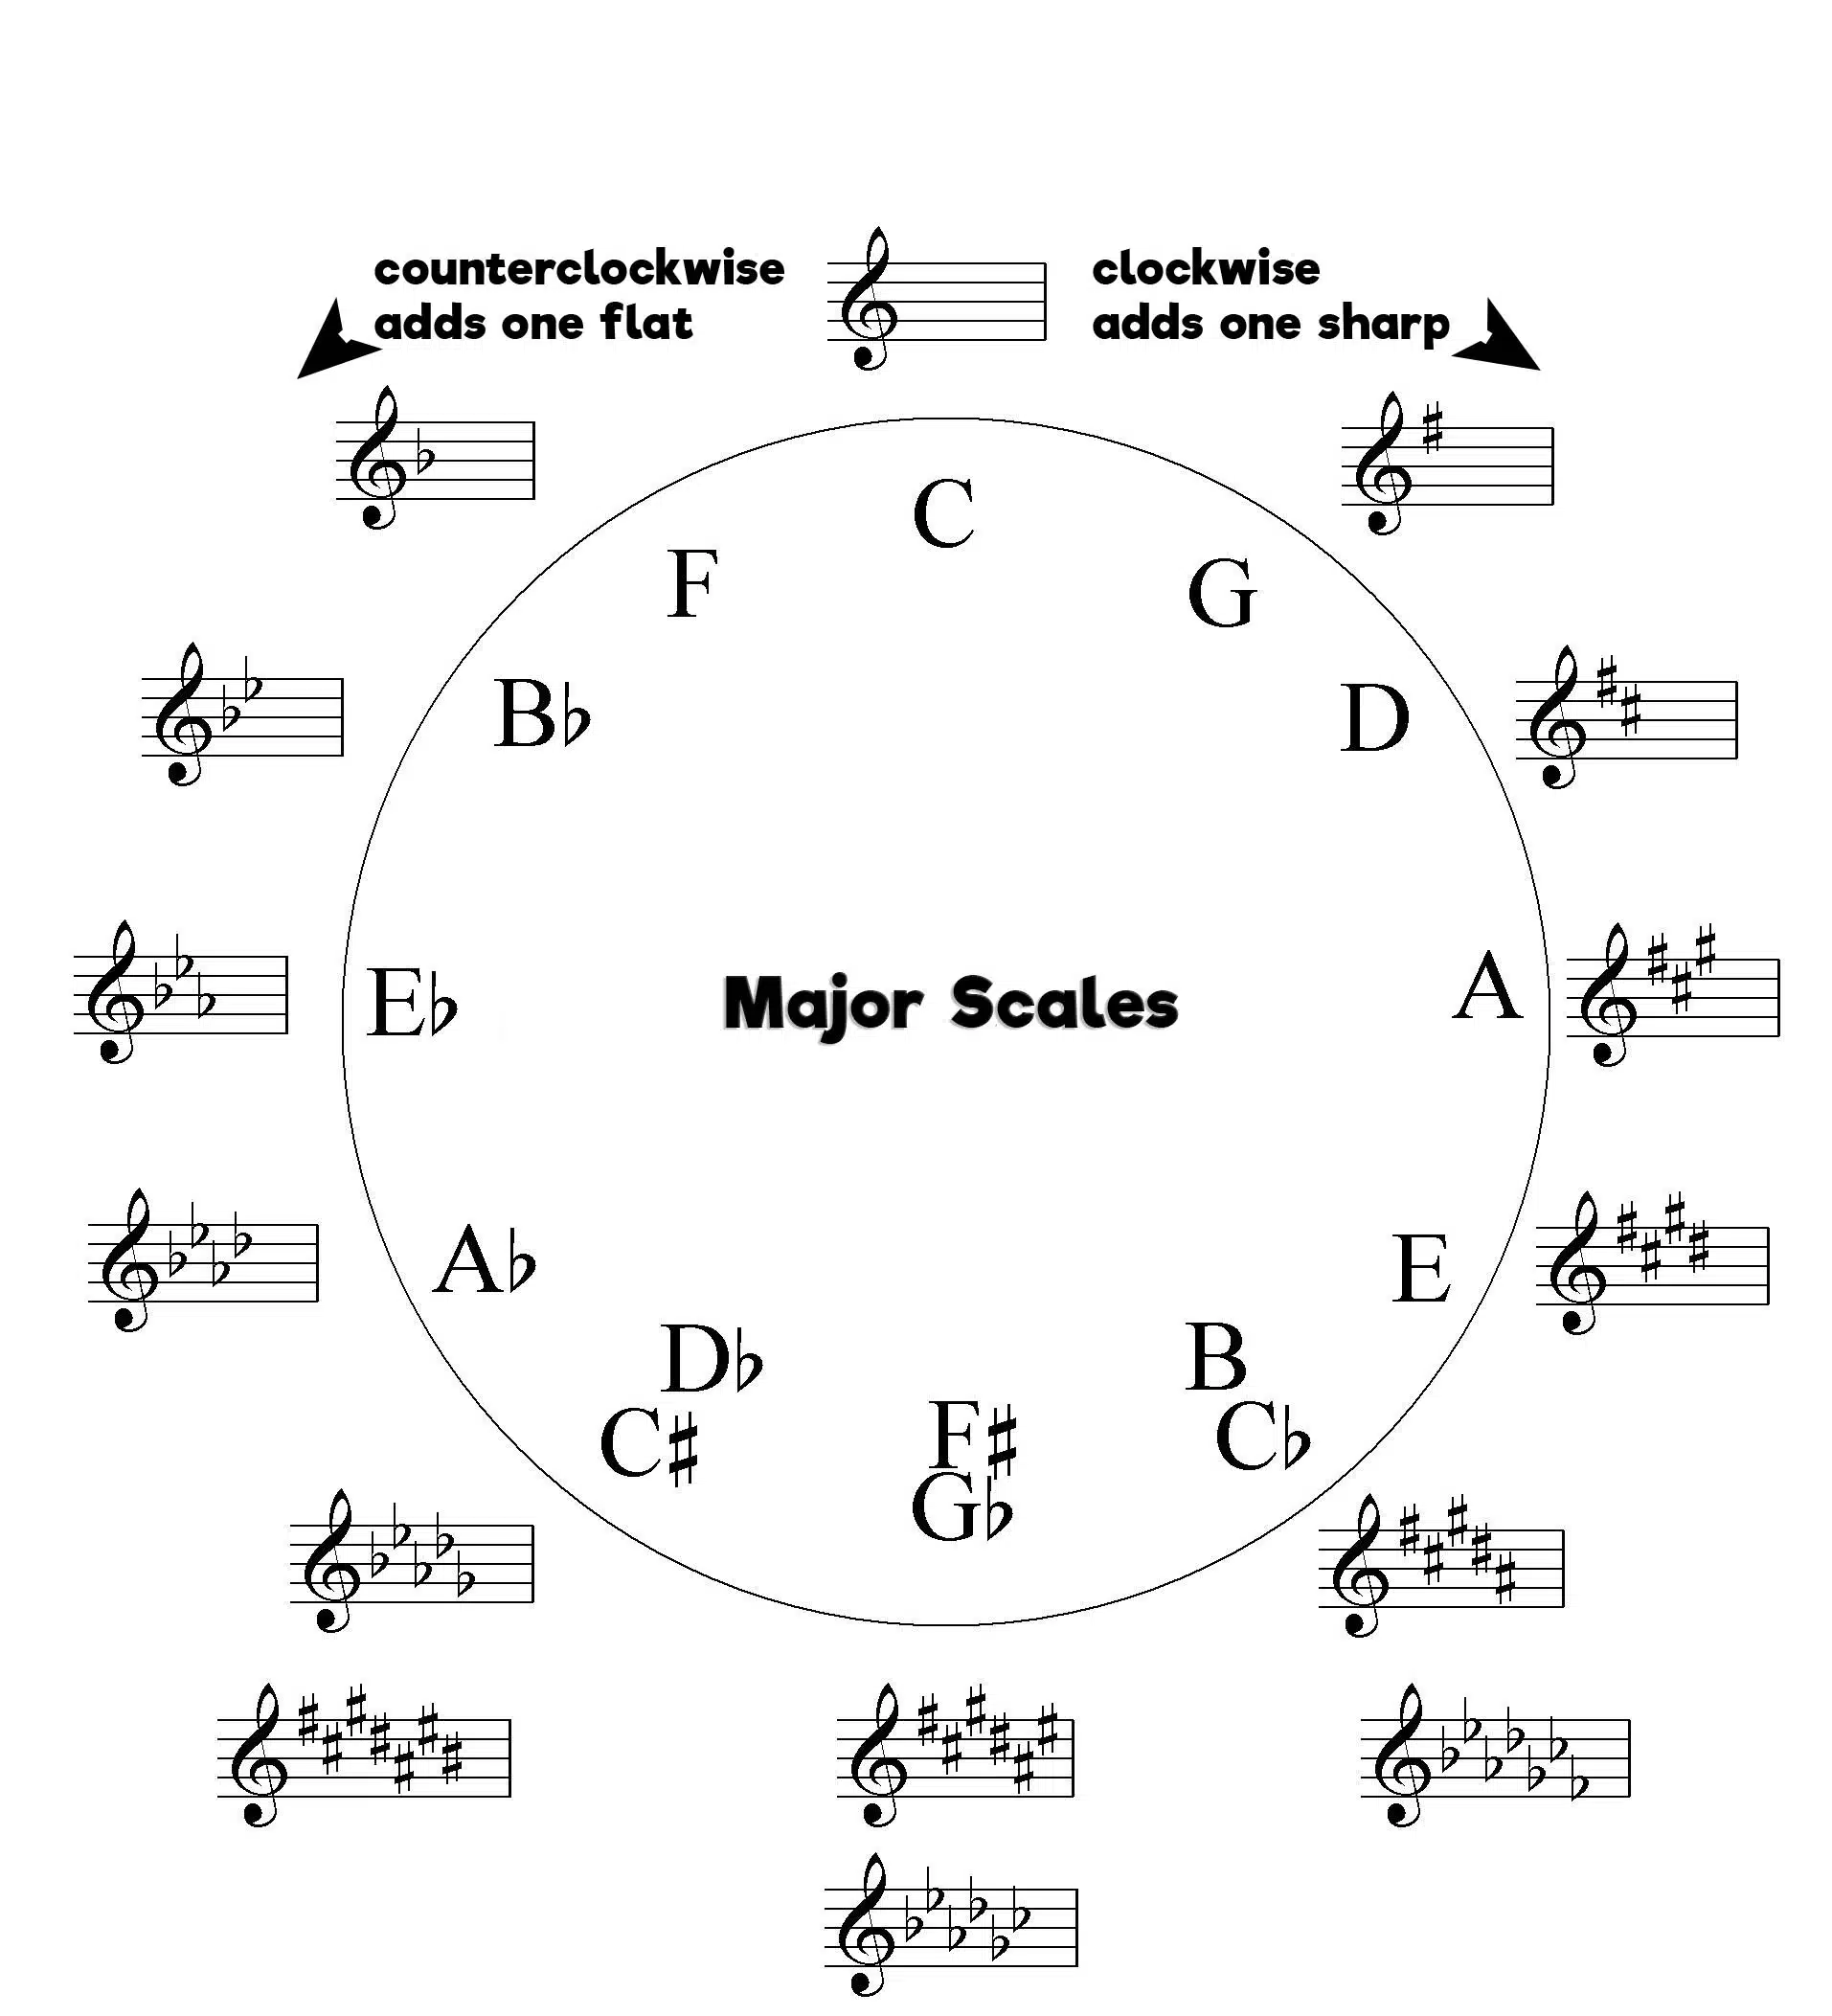 Sharps Circle Clockwise Counter clockwise - Unison